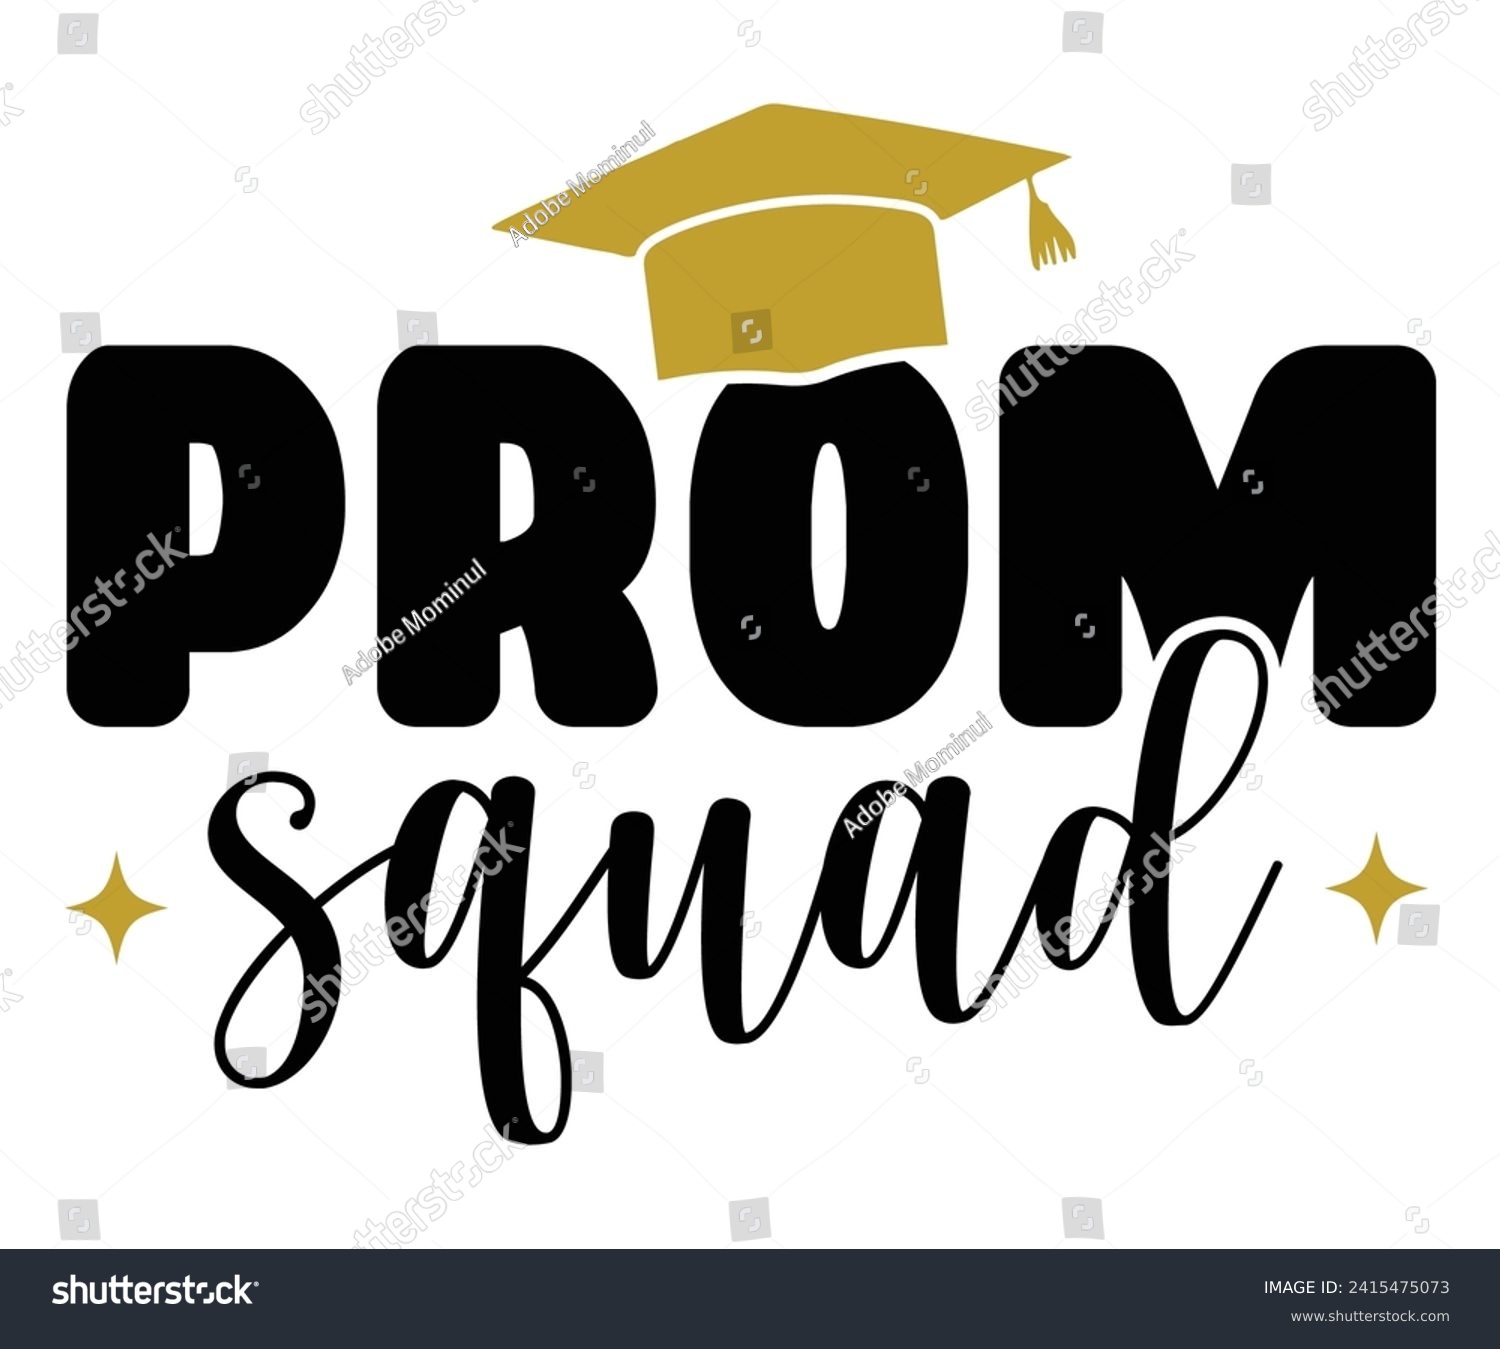 SVG of Prom Squad Svg,Graduation Svg,Senior Svg,Graduate T shirt,Graduation cap,Graduation 2024 Shirt,Family Graduation Svg,Pre-K Grad Shirt,Graduation Qoutes,Graduation Gift Shirt,Cut File,Groovy, svg